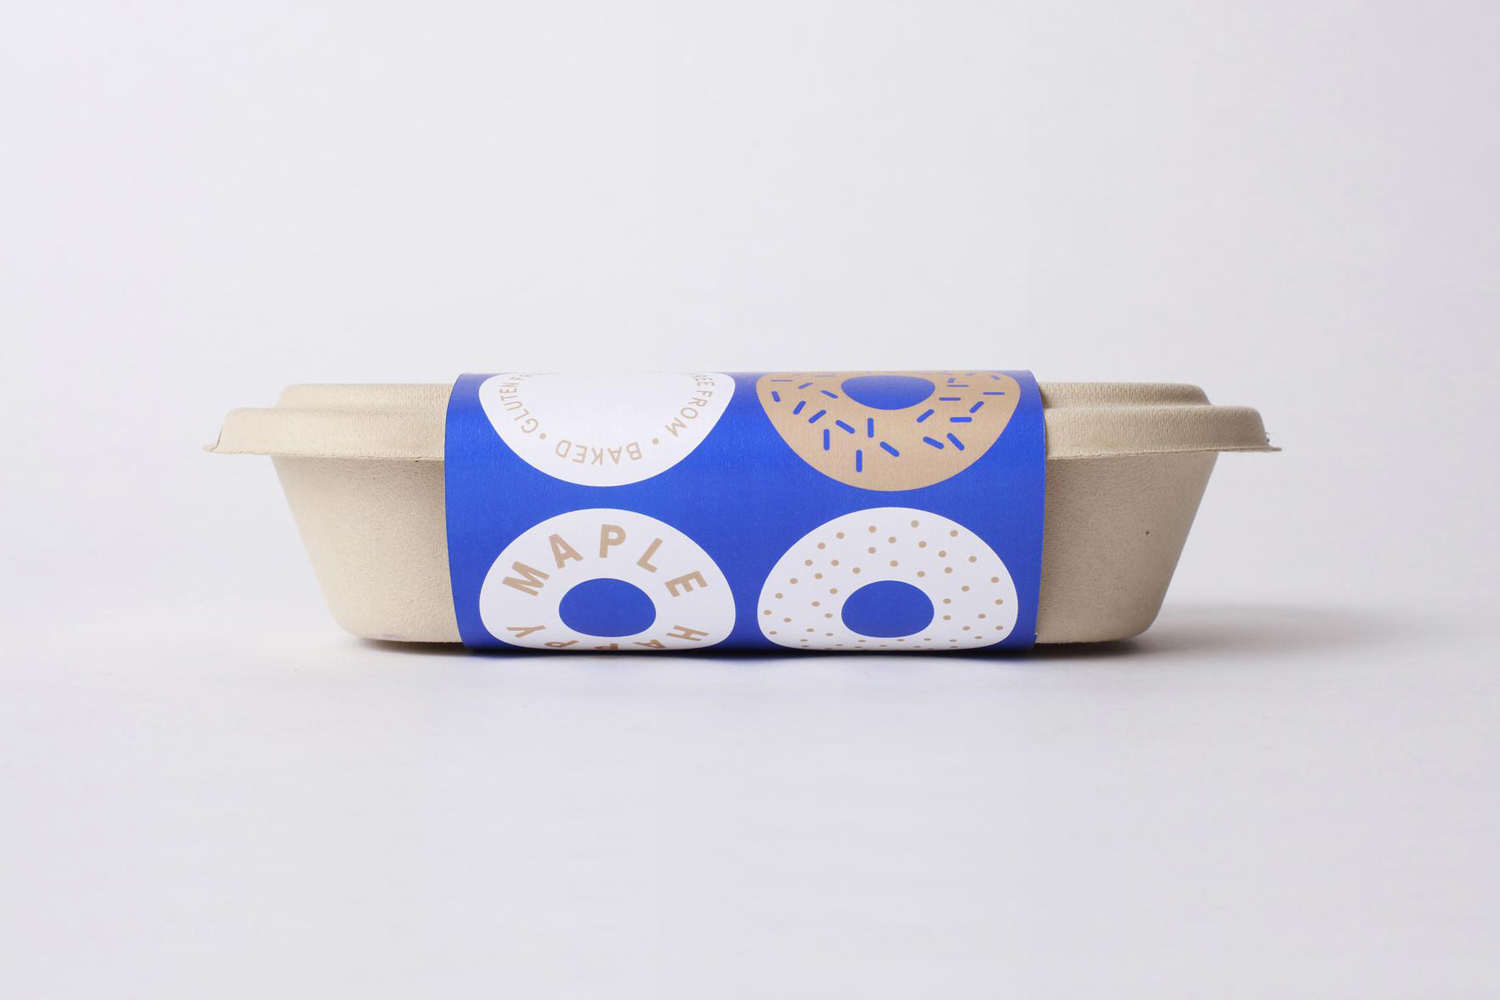 Brand identity and packaging by Sydney-based graphic design studio Garbett for donut bakery Happy Maple. 